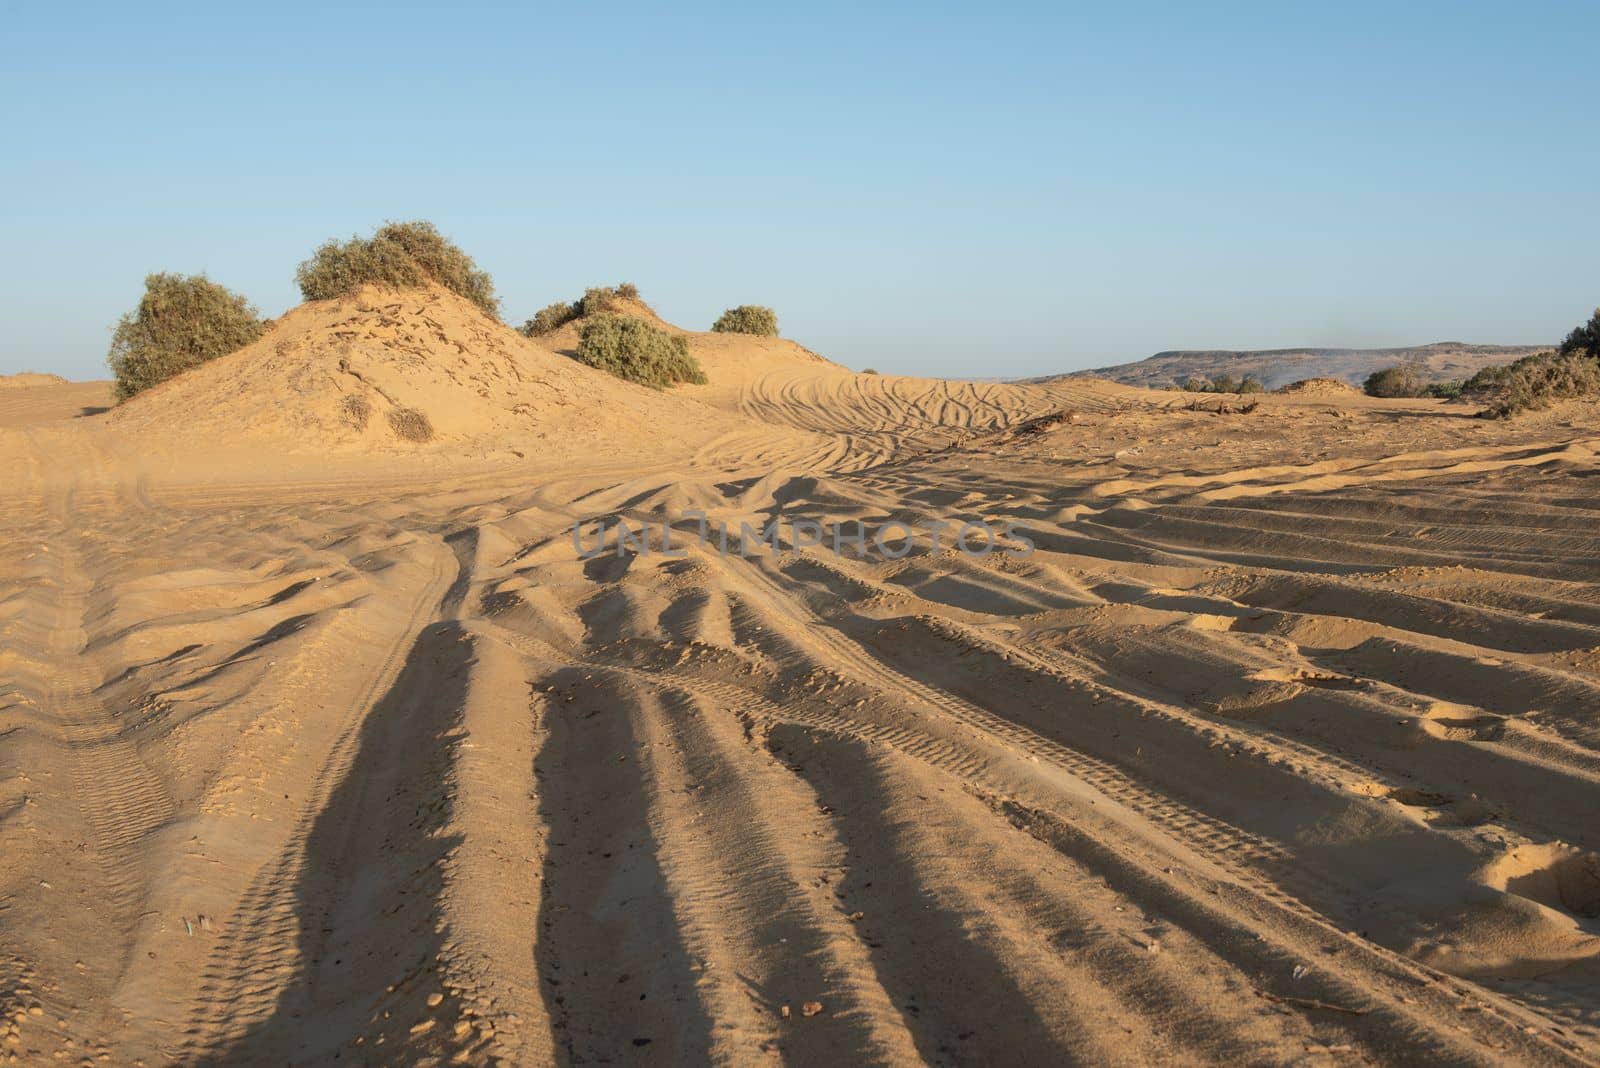 Barren desert landscape in hot climate with sand dunes by paulvinten